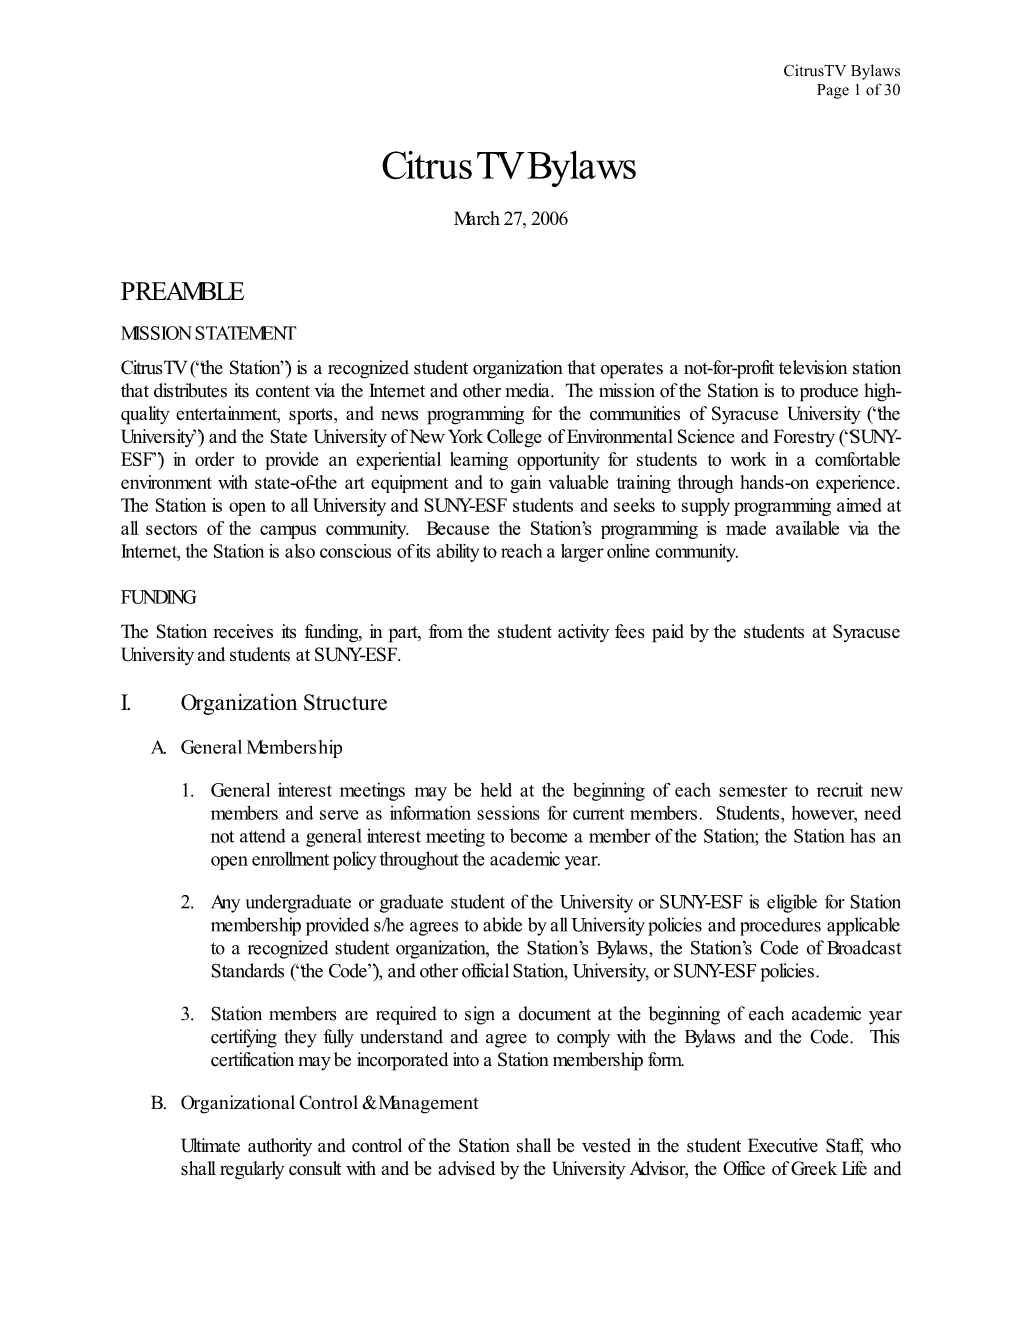 Citrustv Bylaws Page 1 of 30